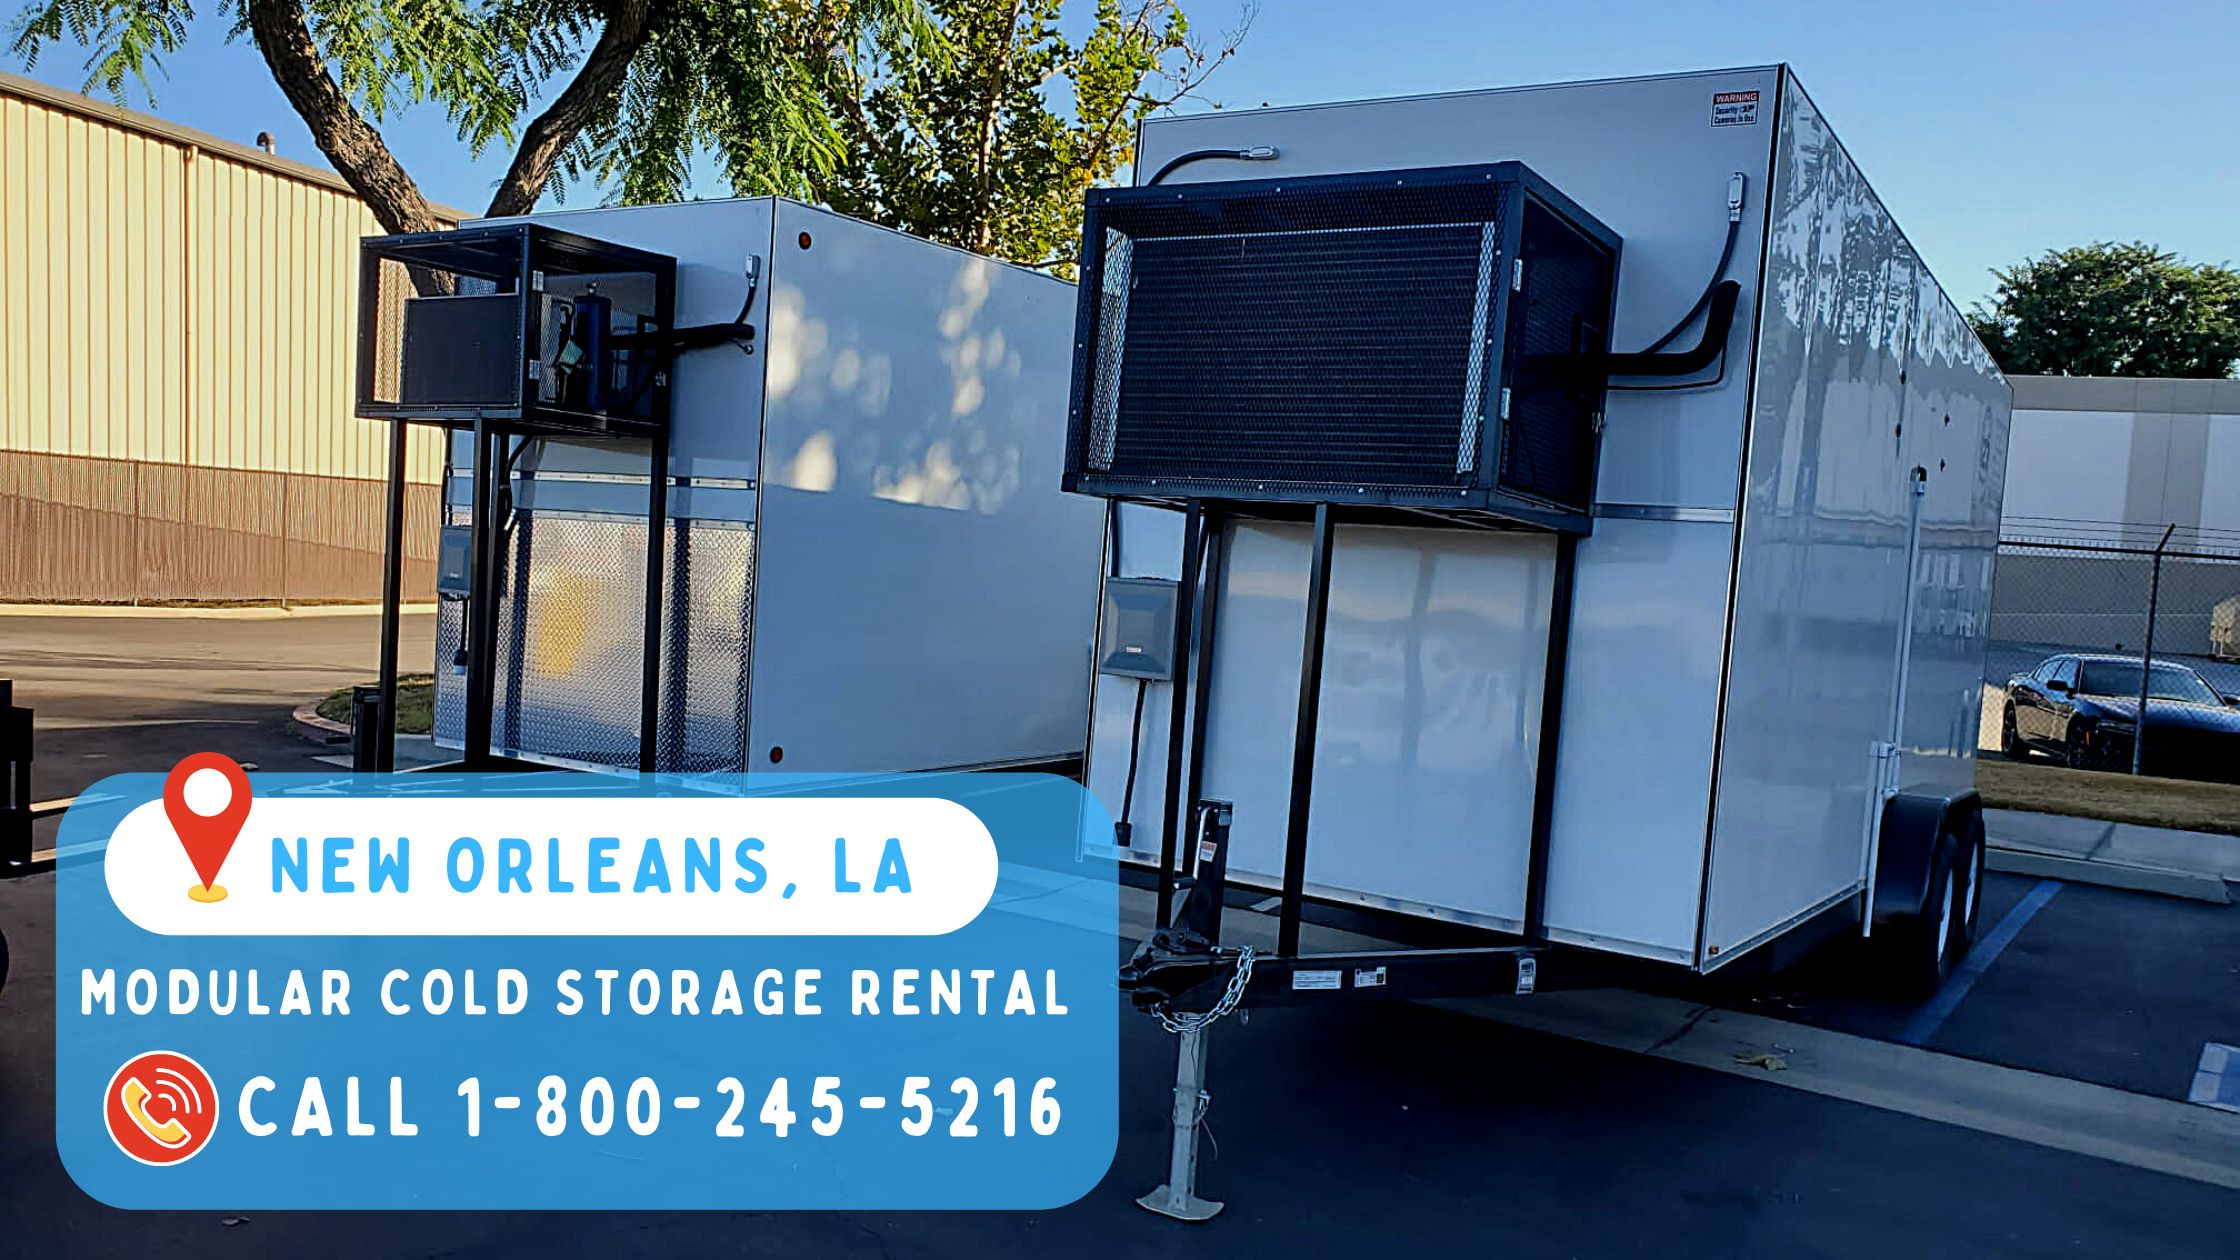 Modular cold storage rental in New Orleans